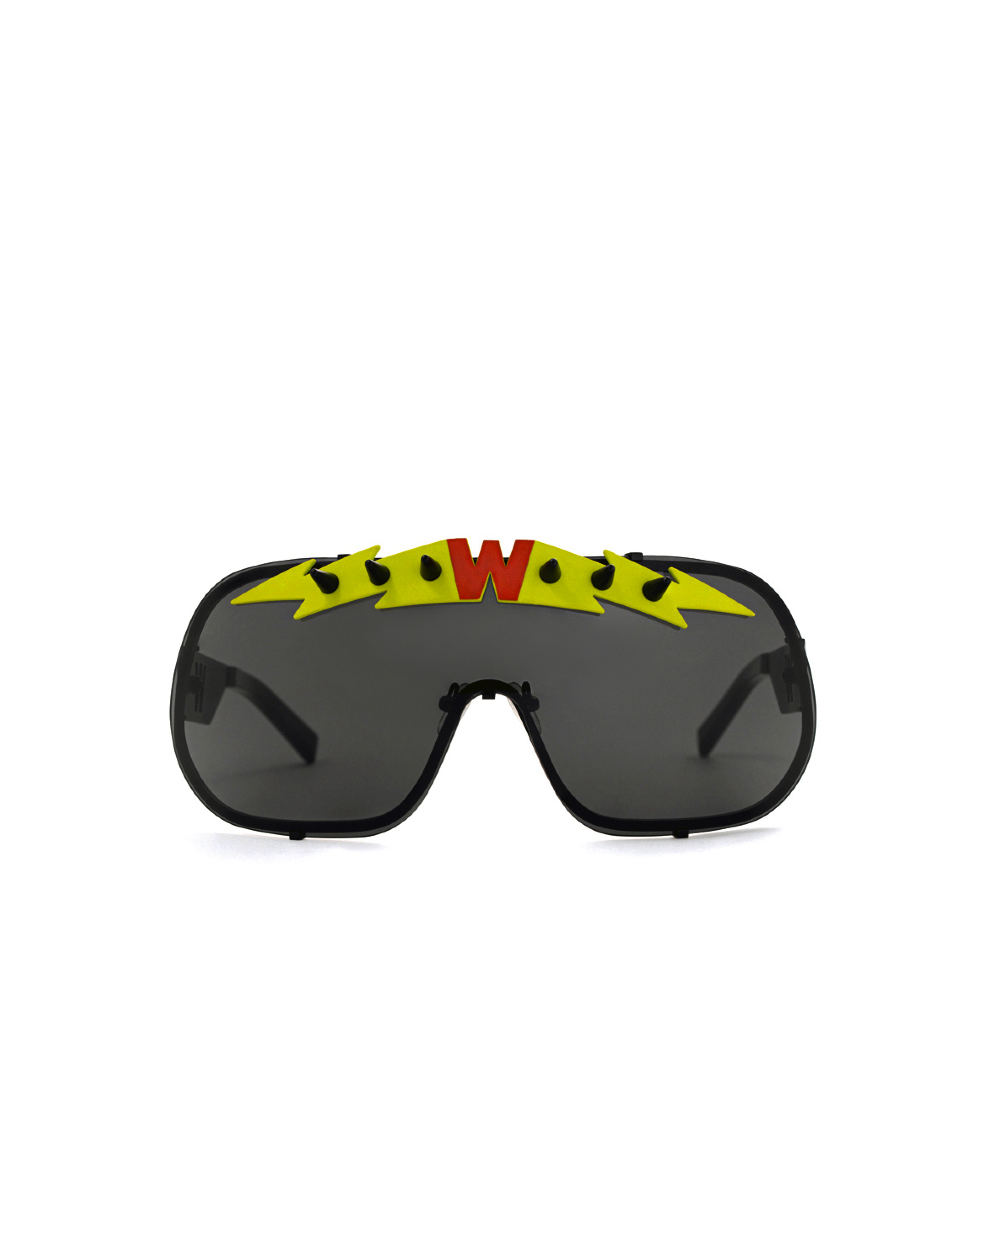 BlitZ Solar Shield Sunglasses. Black &amp; Neon Lightning